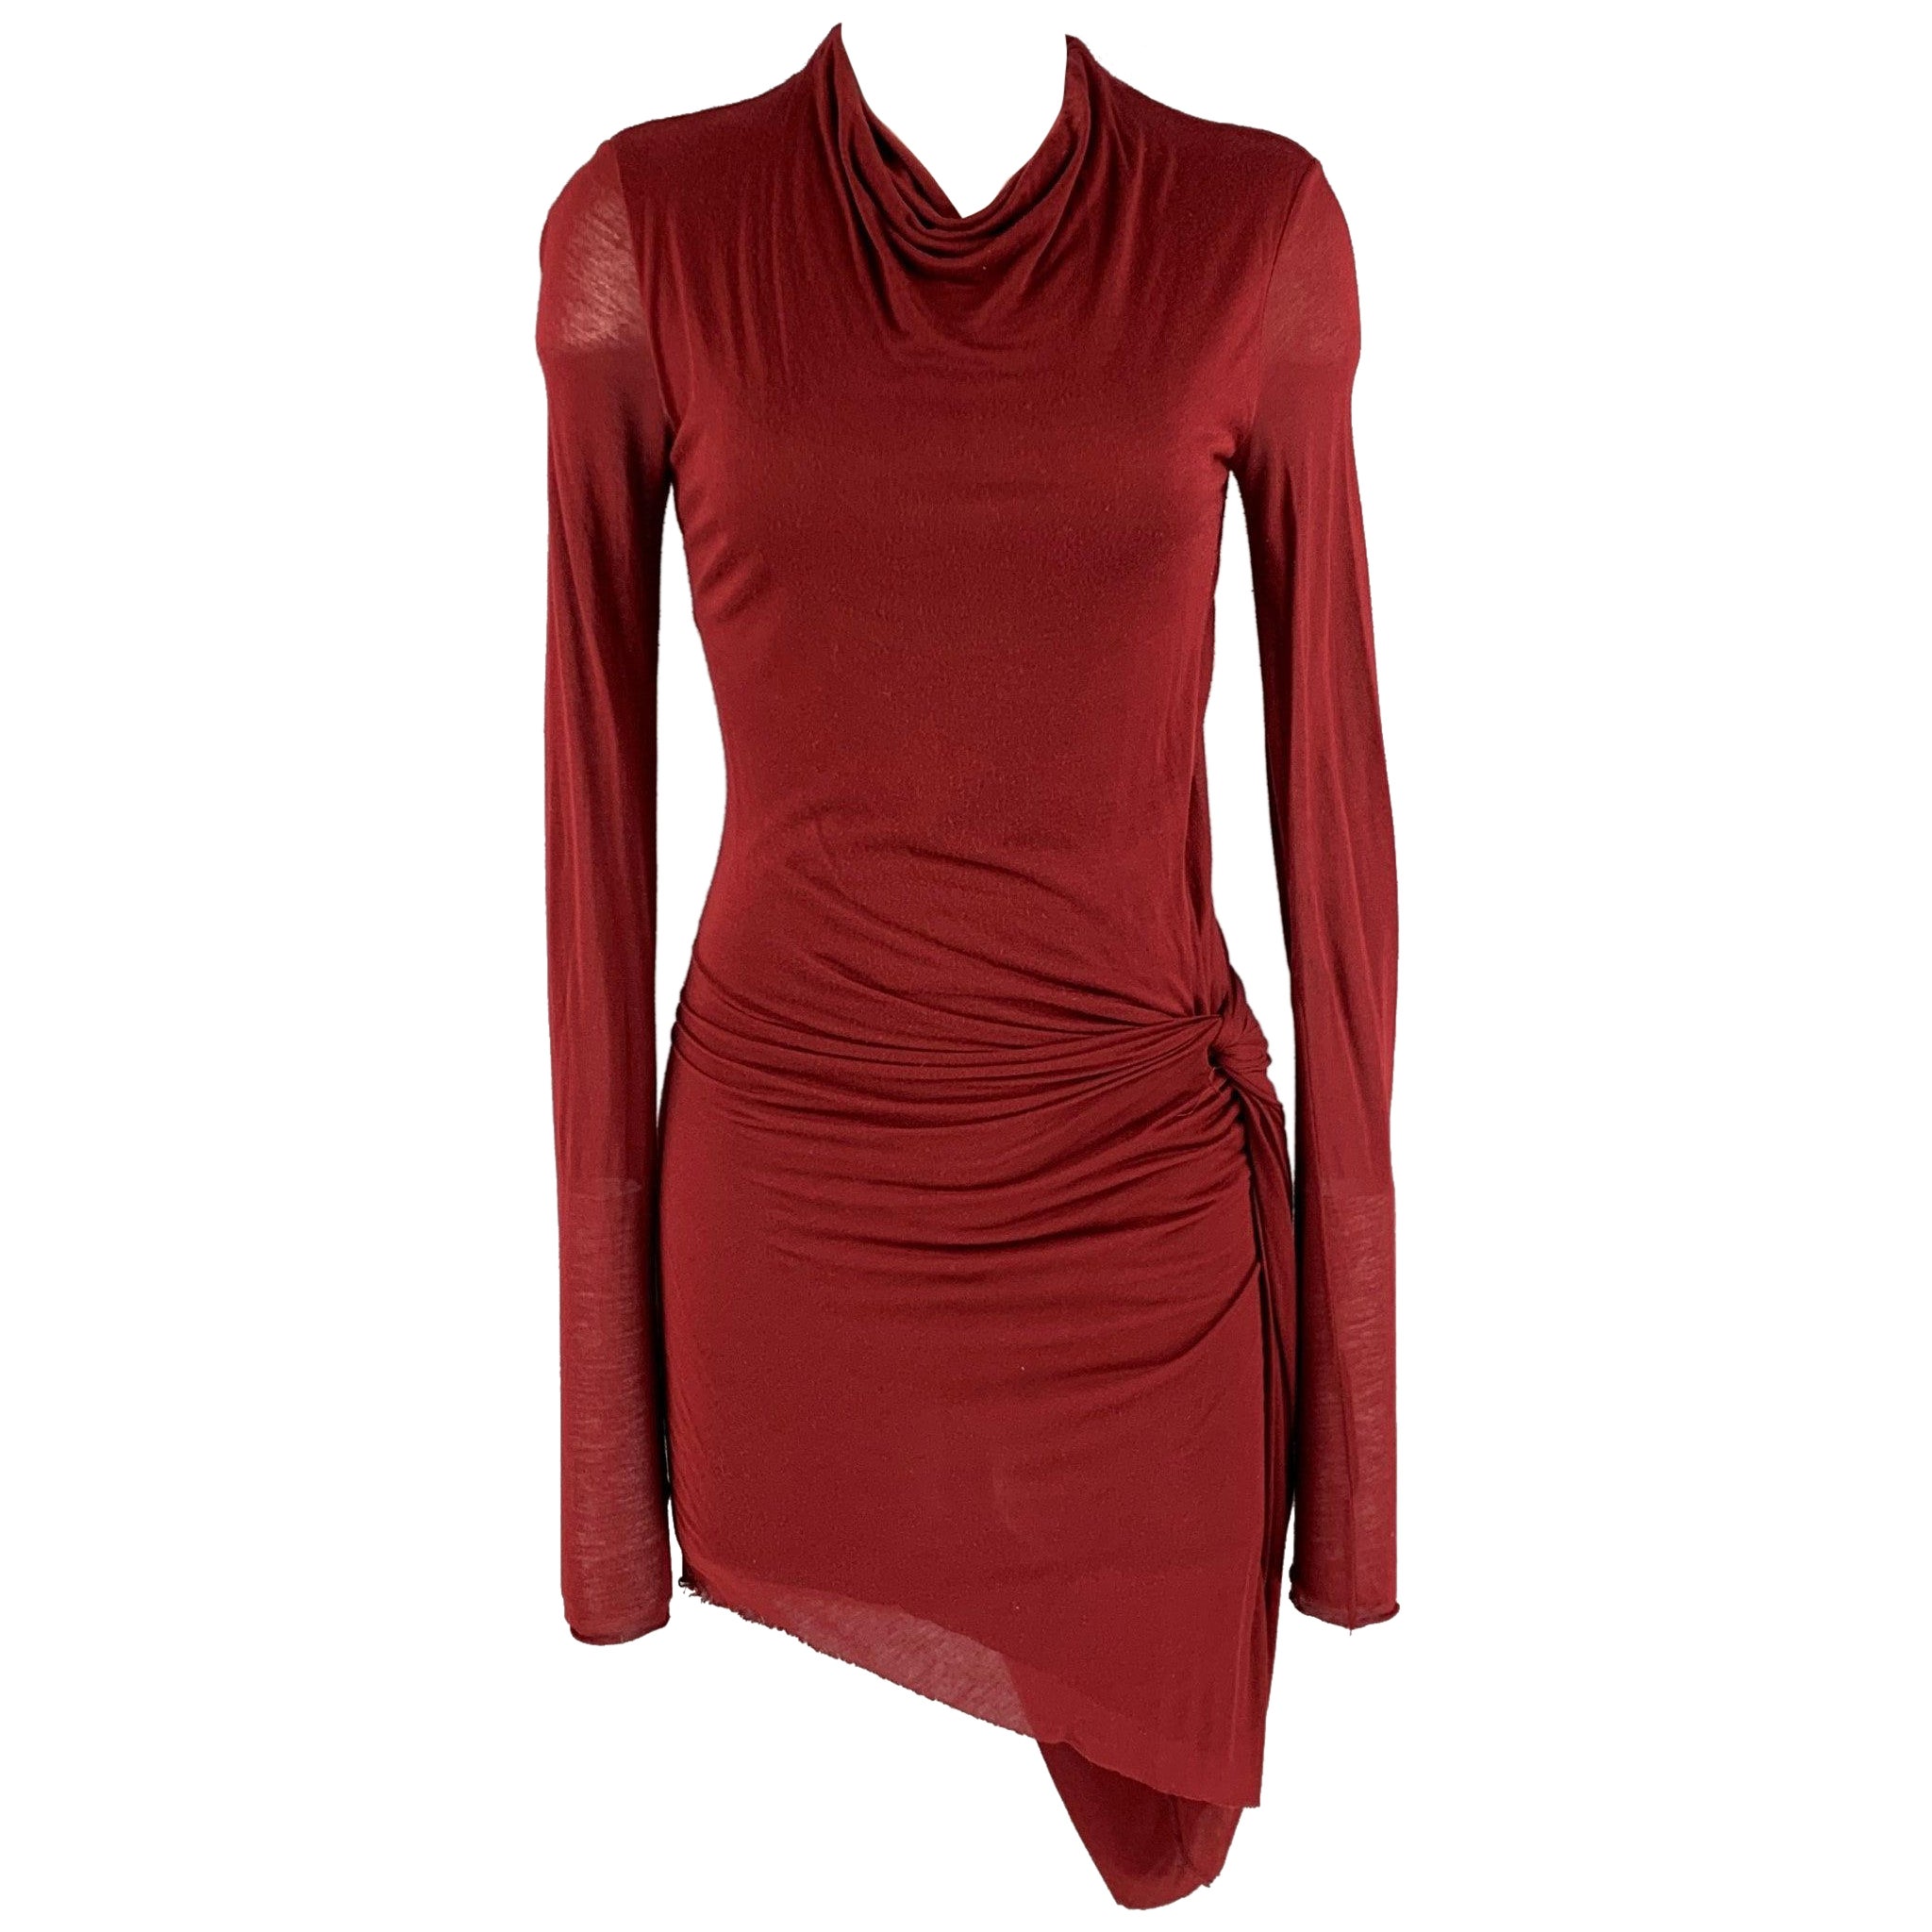 HELMUT LANG Size S Burgundy Modal Long Sleeve Dress